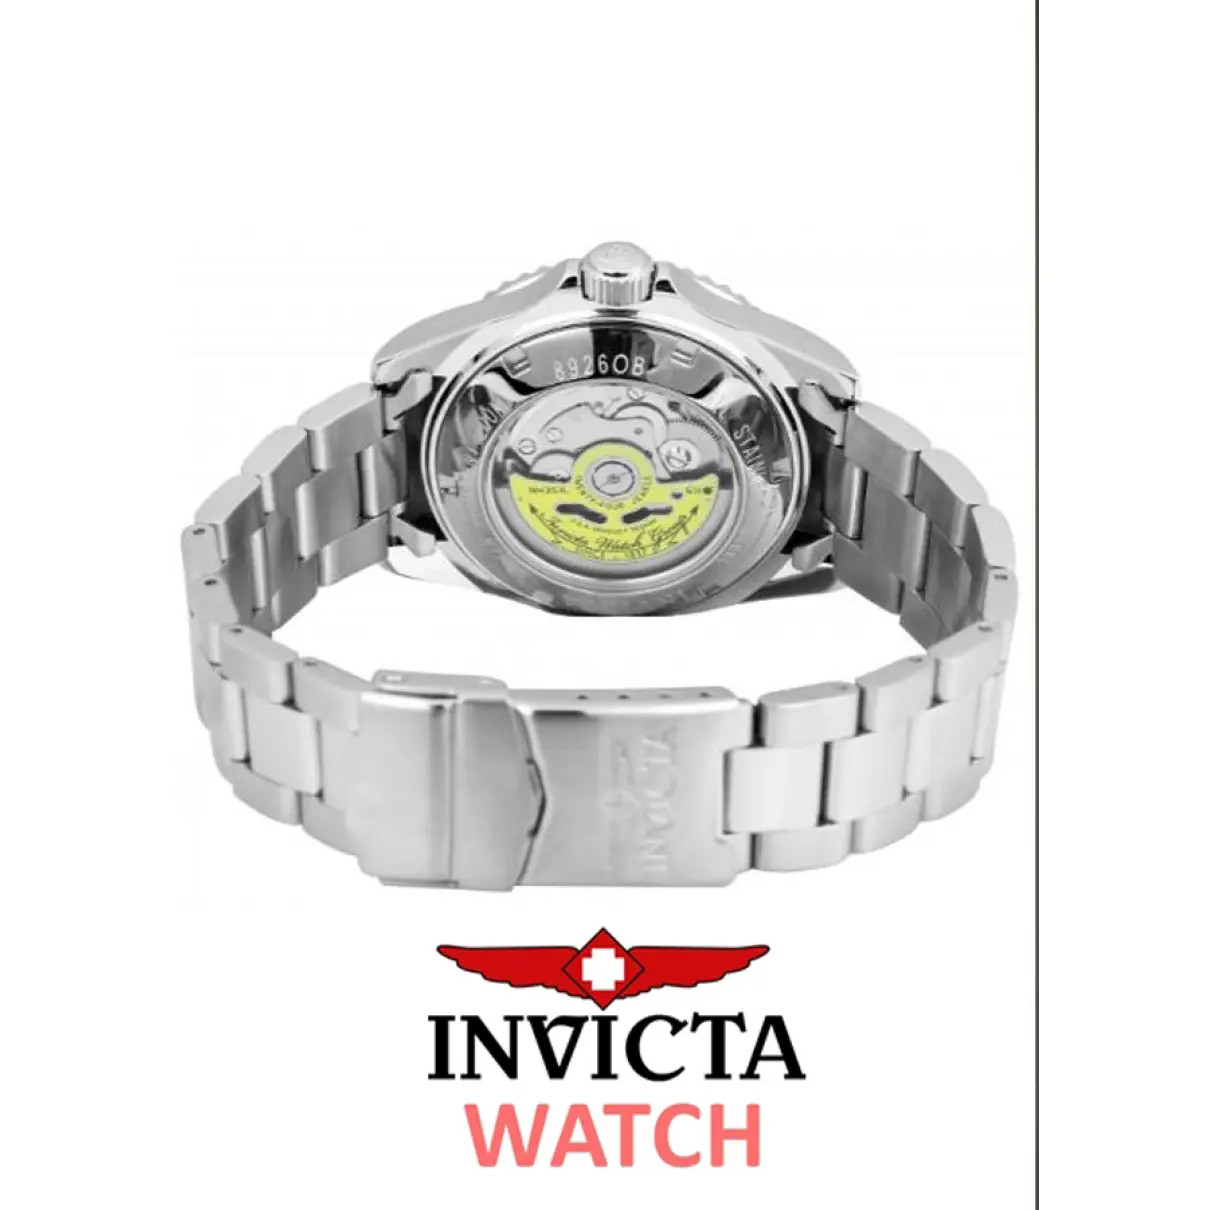 Buy Invicta Watch online